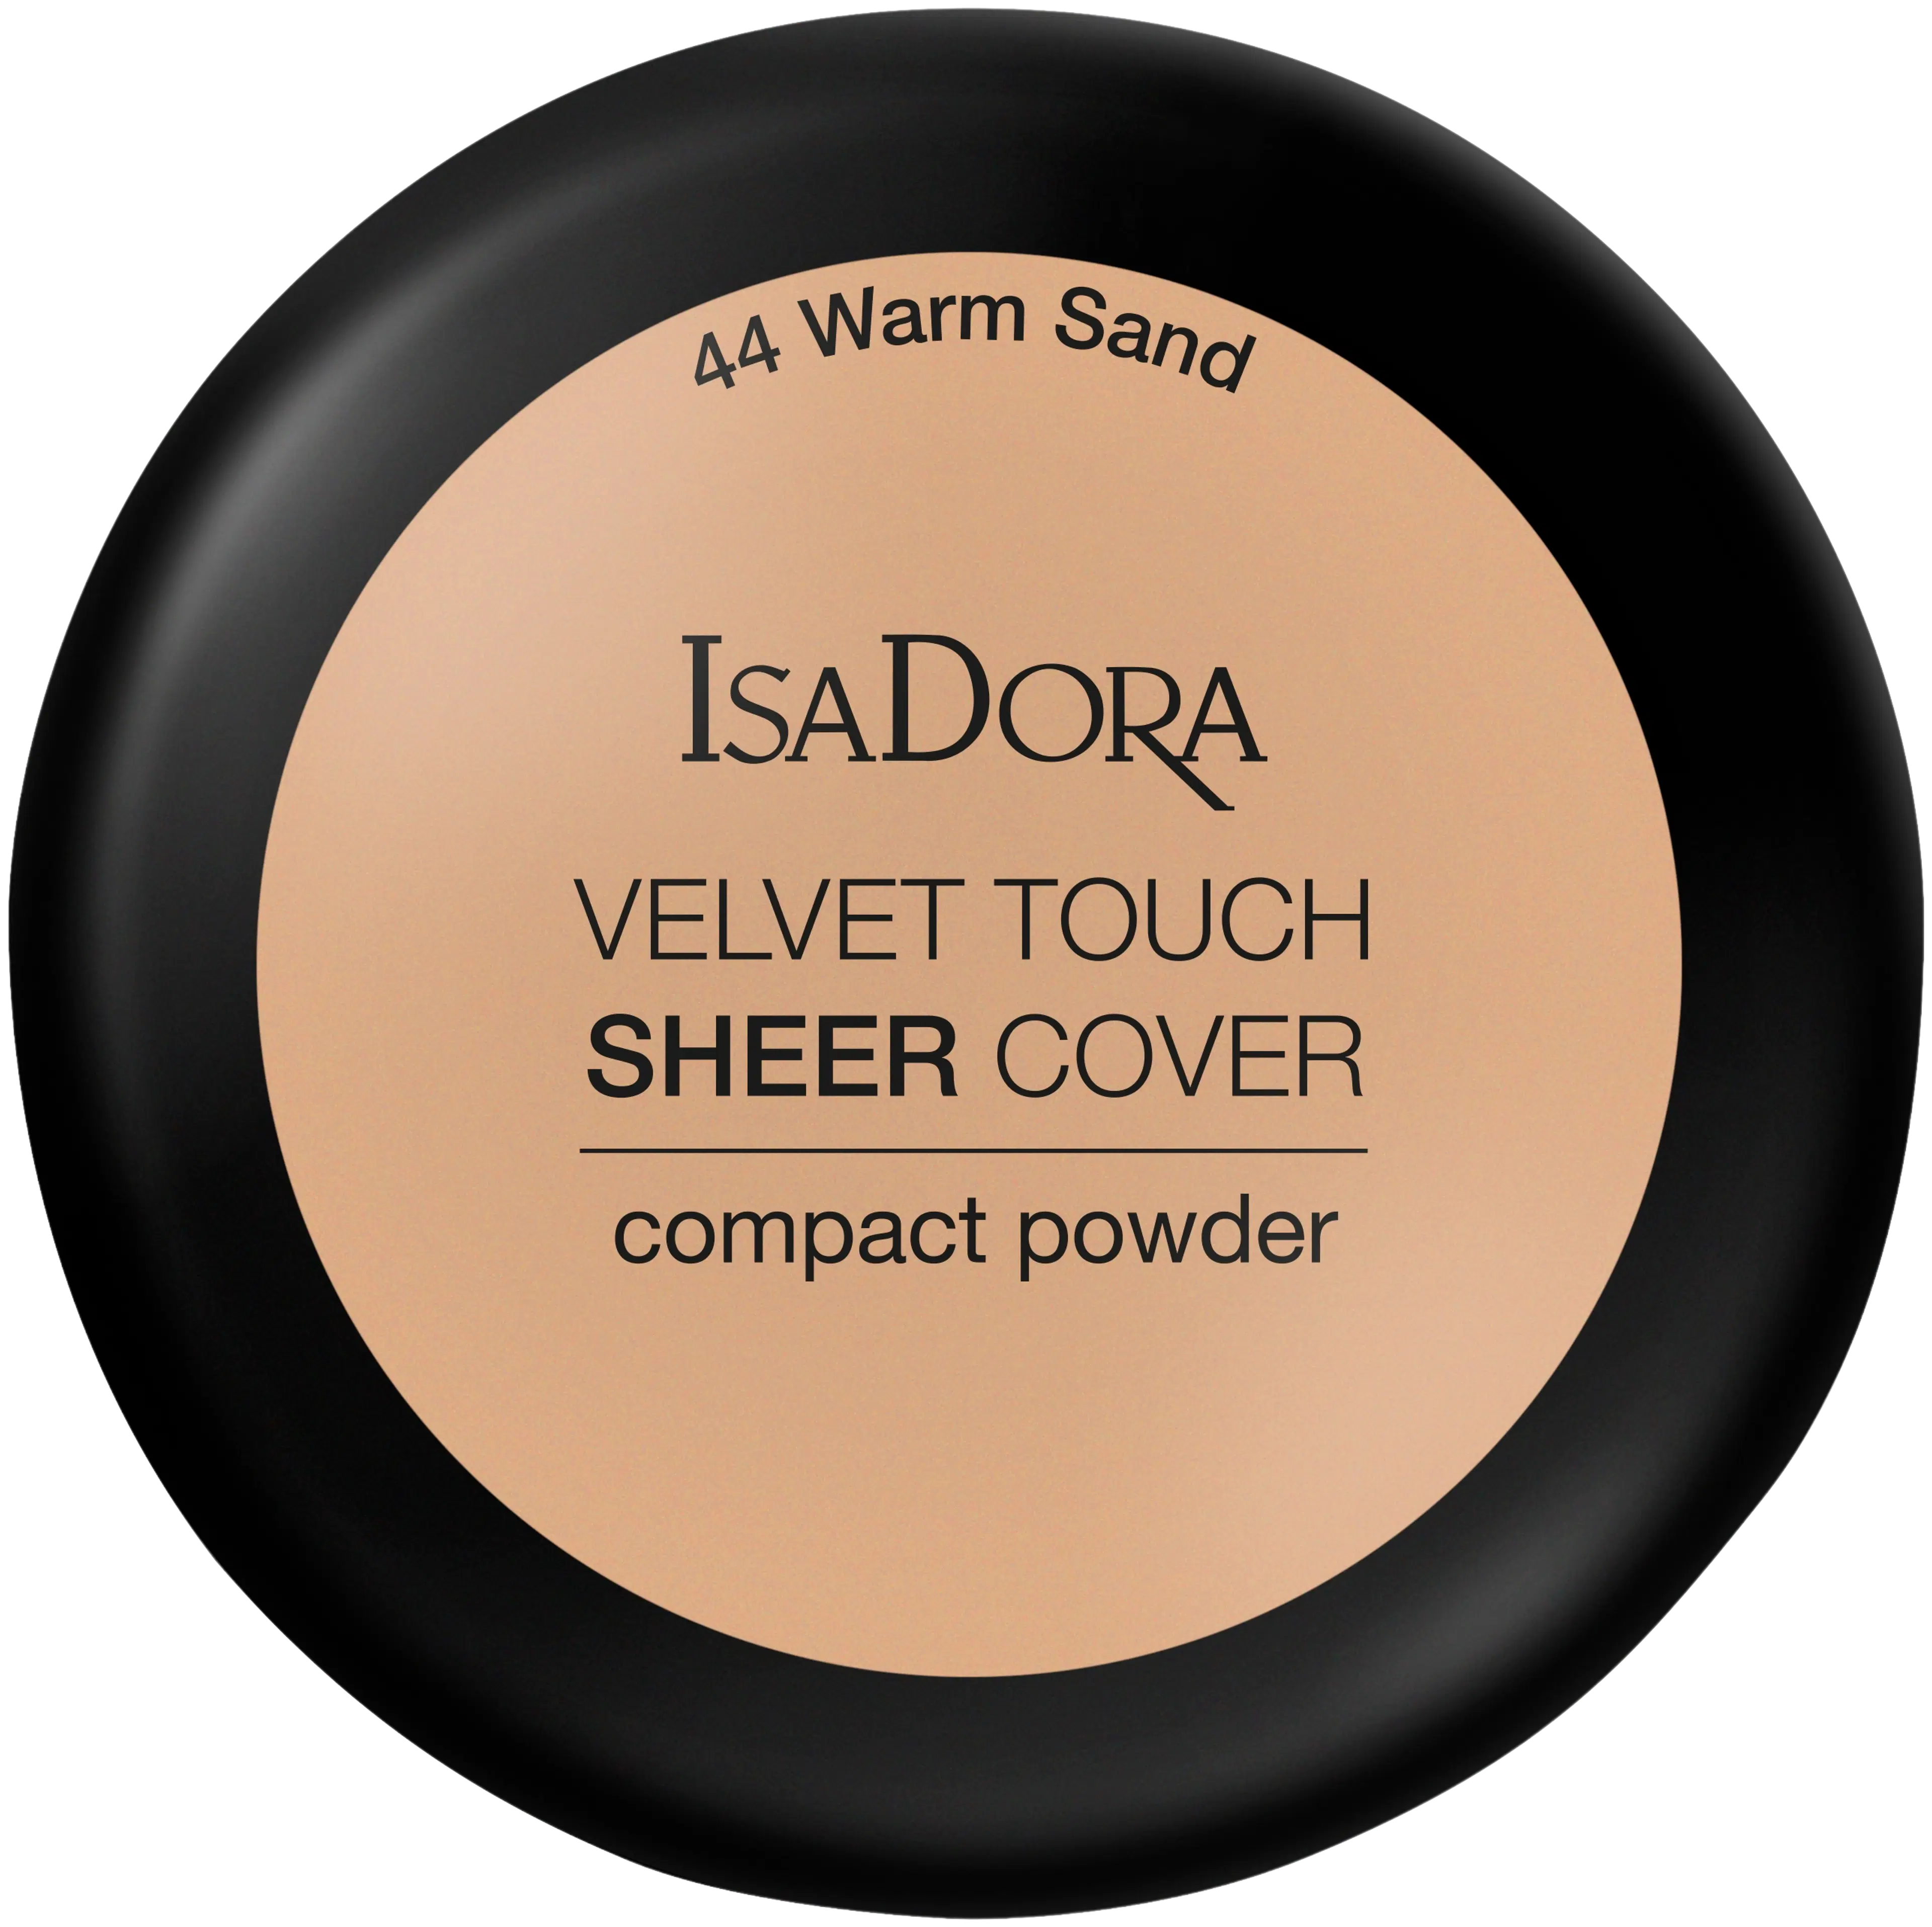 IsaDora Velvet Touch Sheer Cover Compact Powder 10 g 44 Warm Sand kivipuuteri